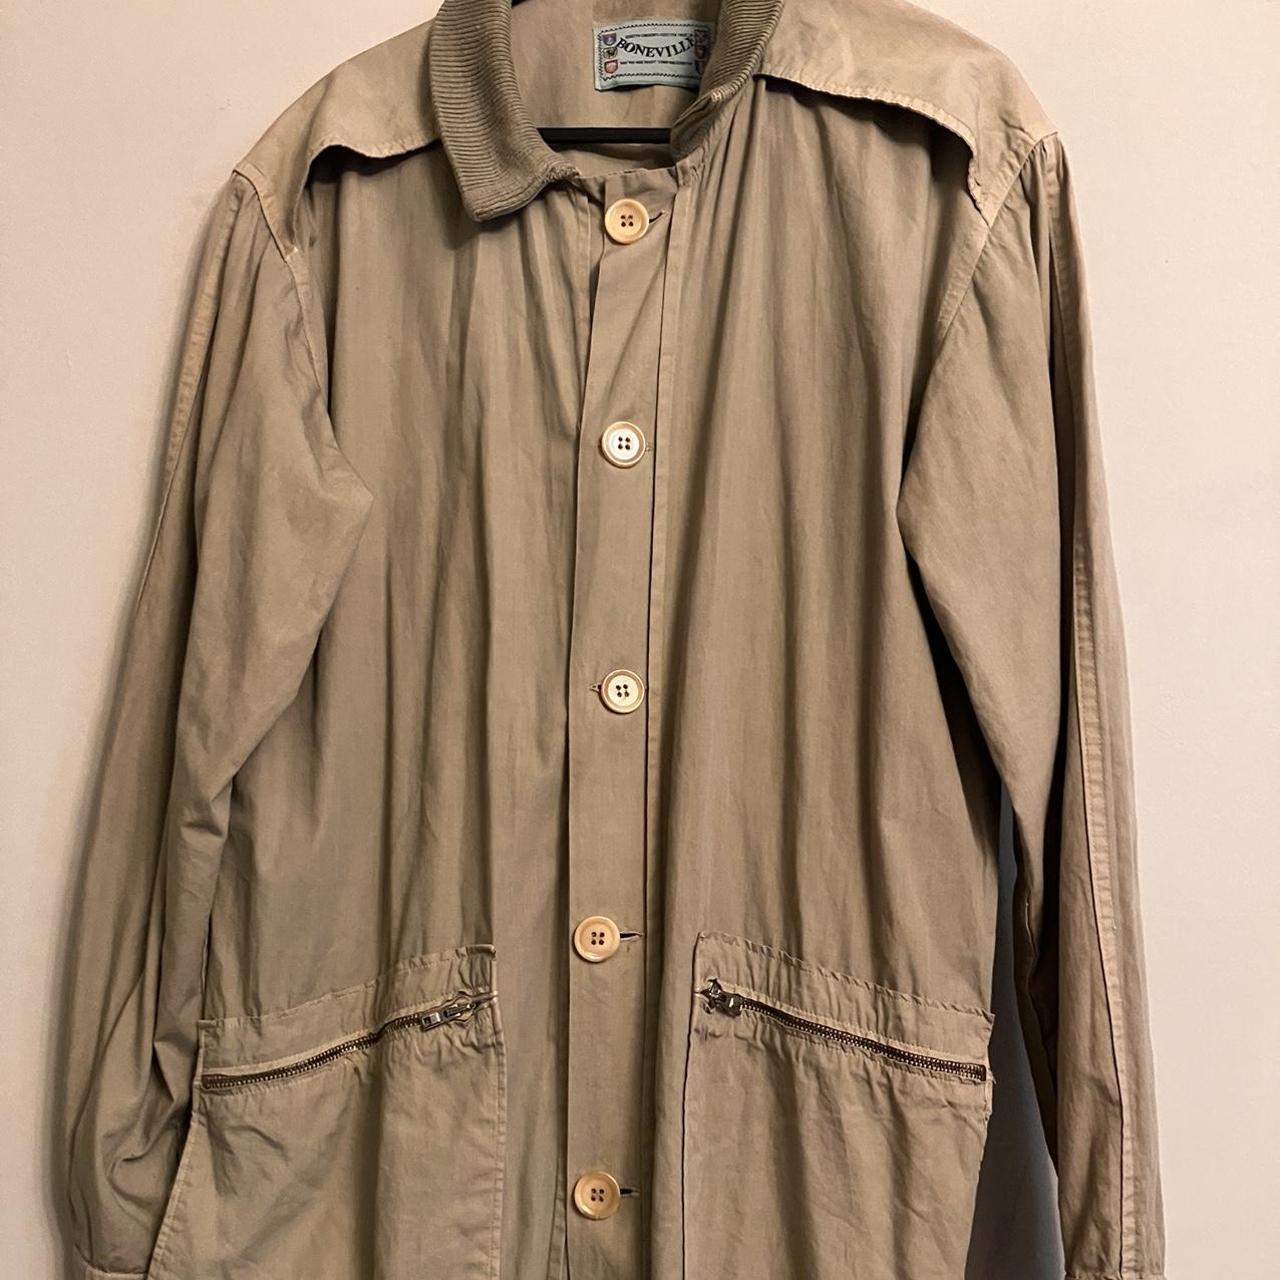 Rare 1980s boneville jacket Massimo Osti Cp... - Depop